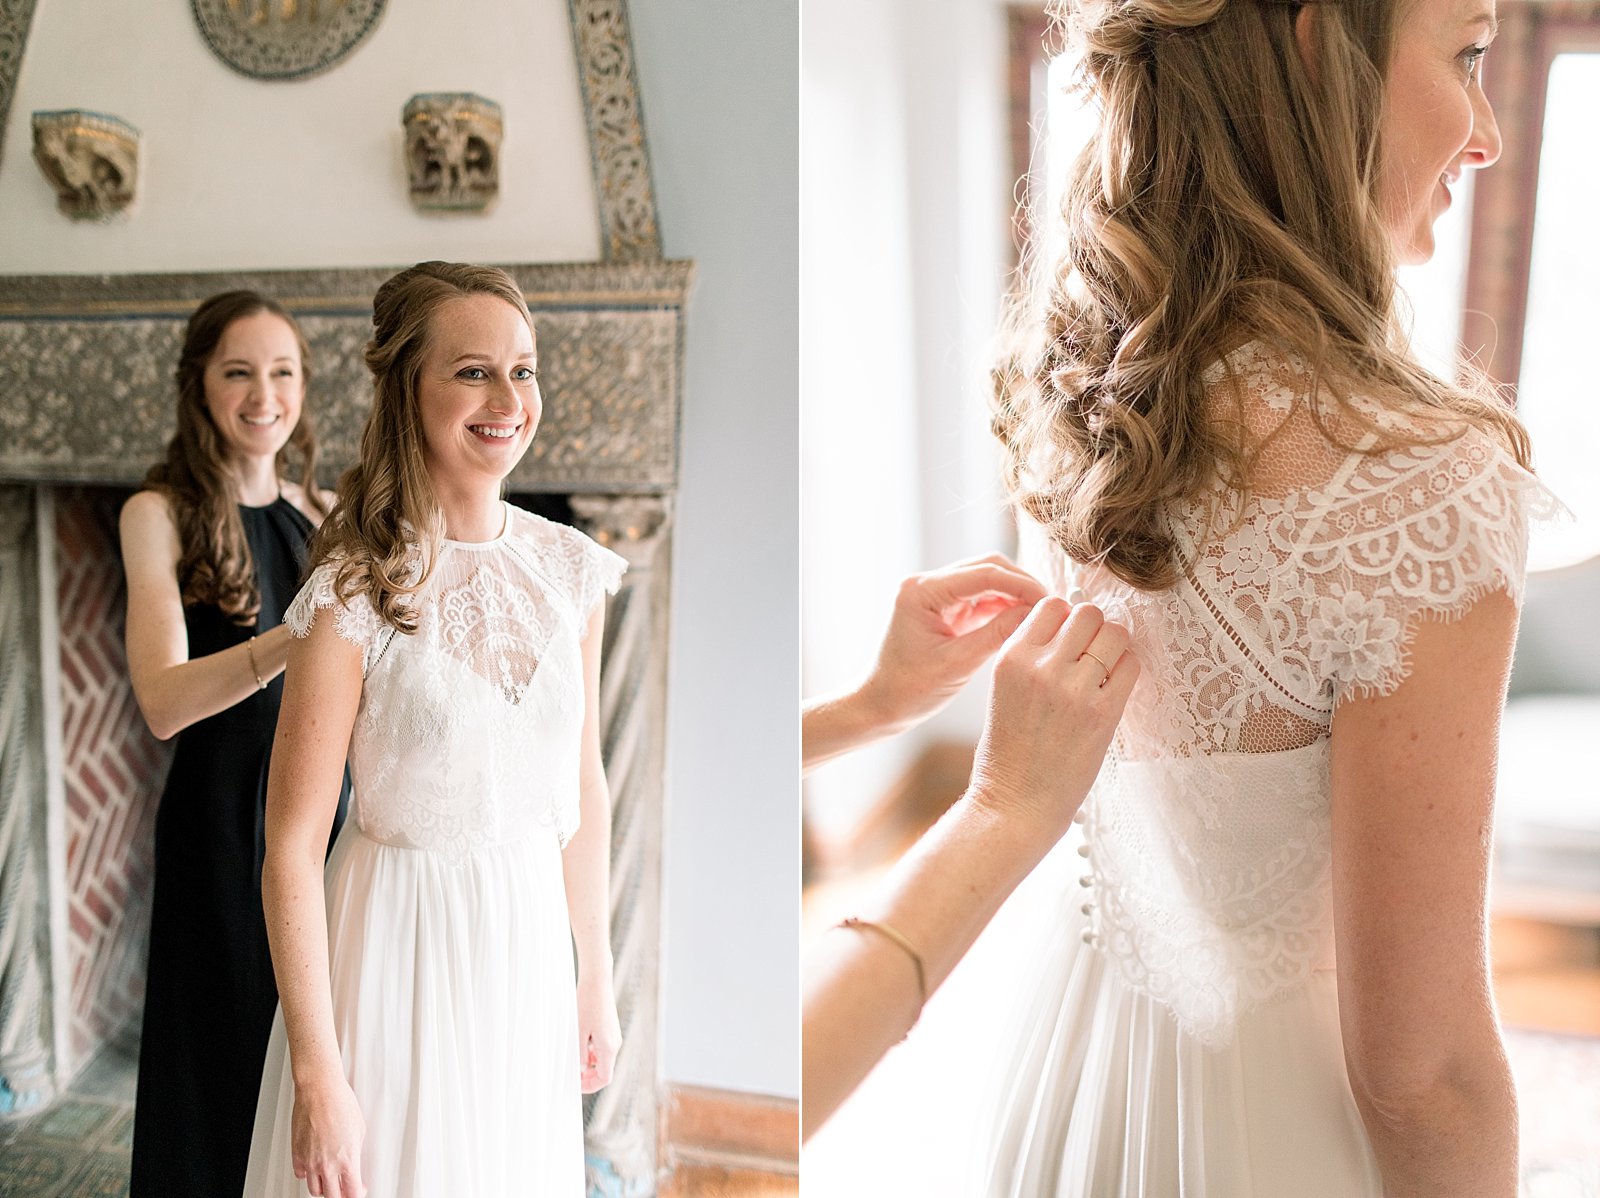 bridesmaid helps bride into wedding dress with lace top 